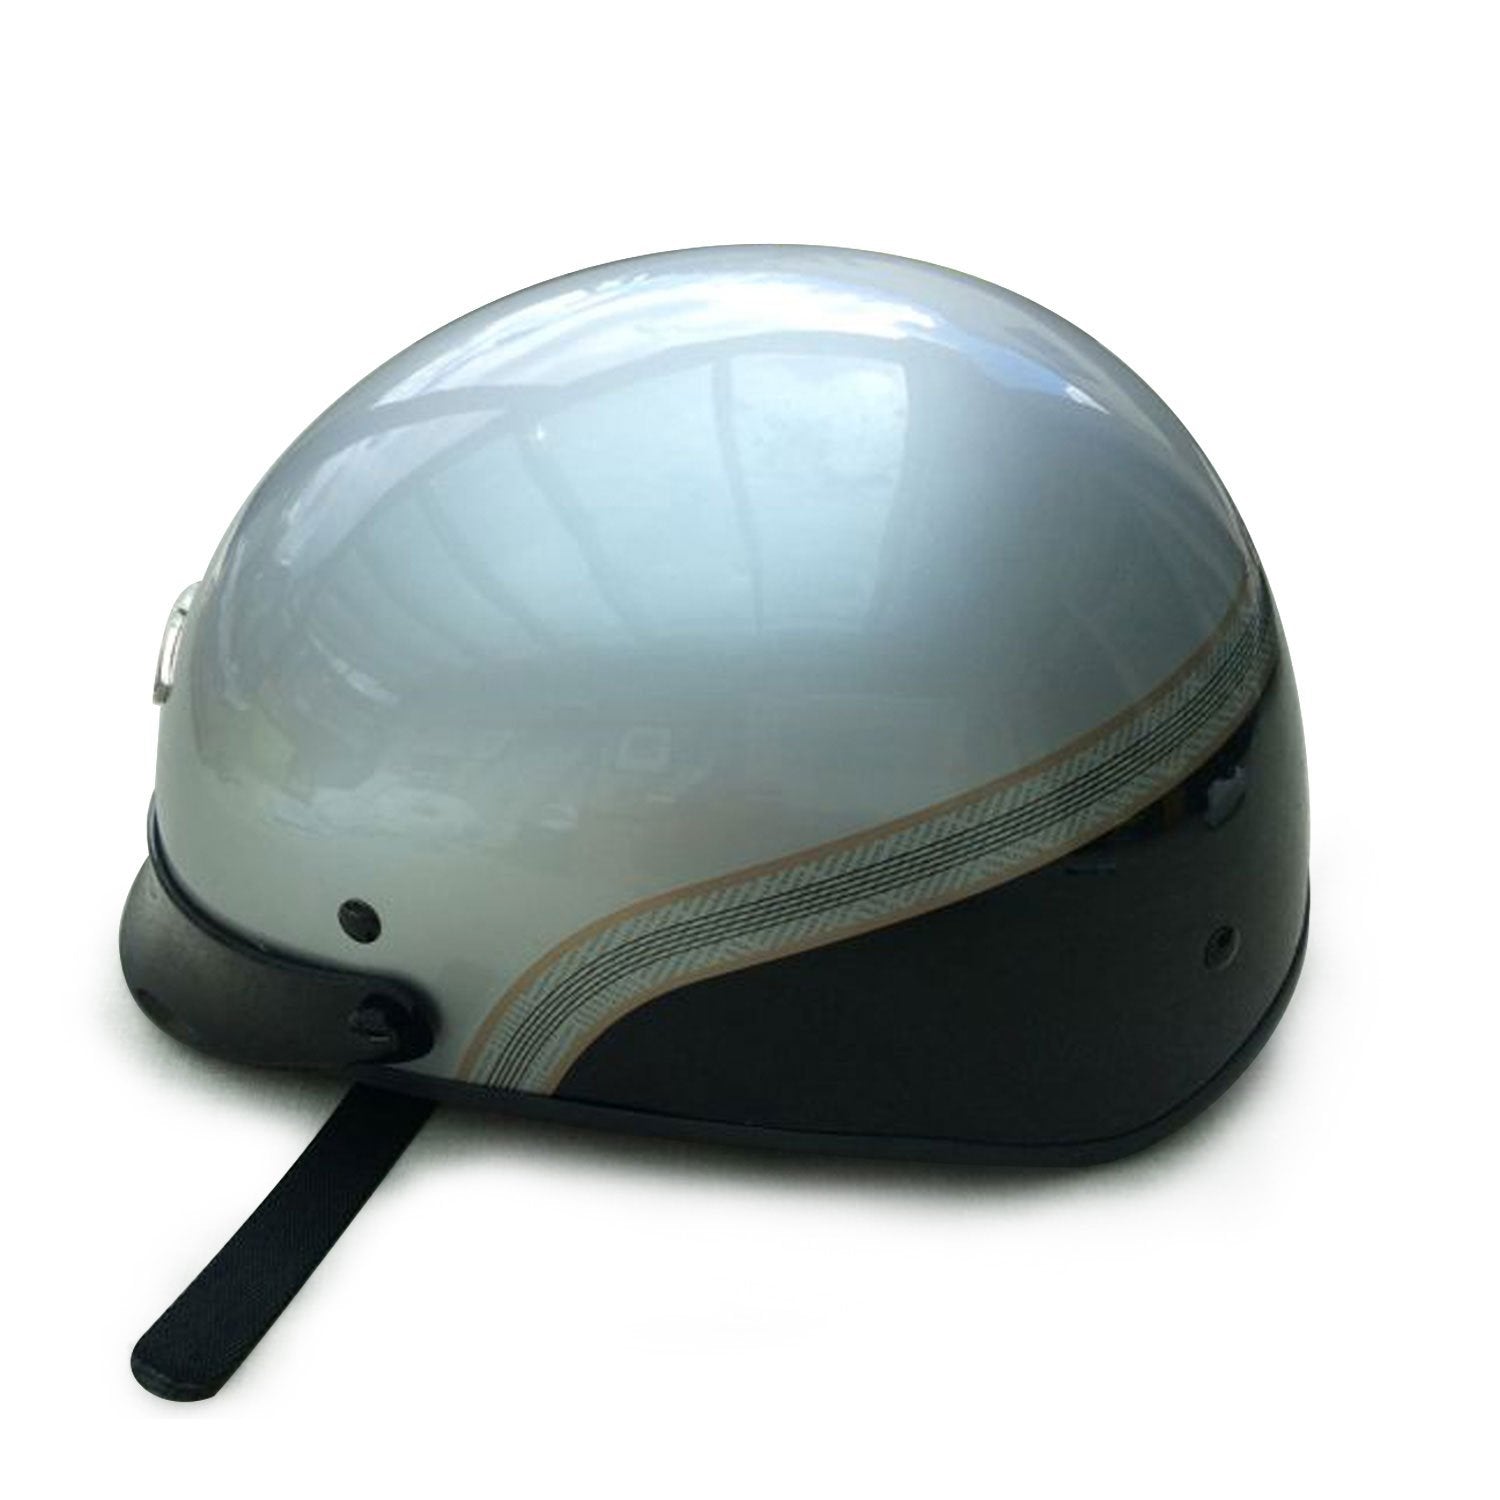 Easy Application decals Helmet stripe in Harley-Davidson 100th Anniversary  style